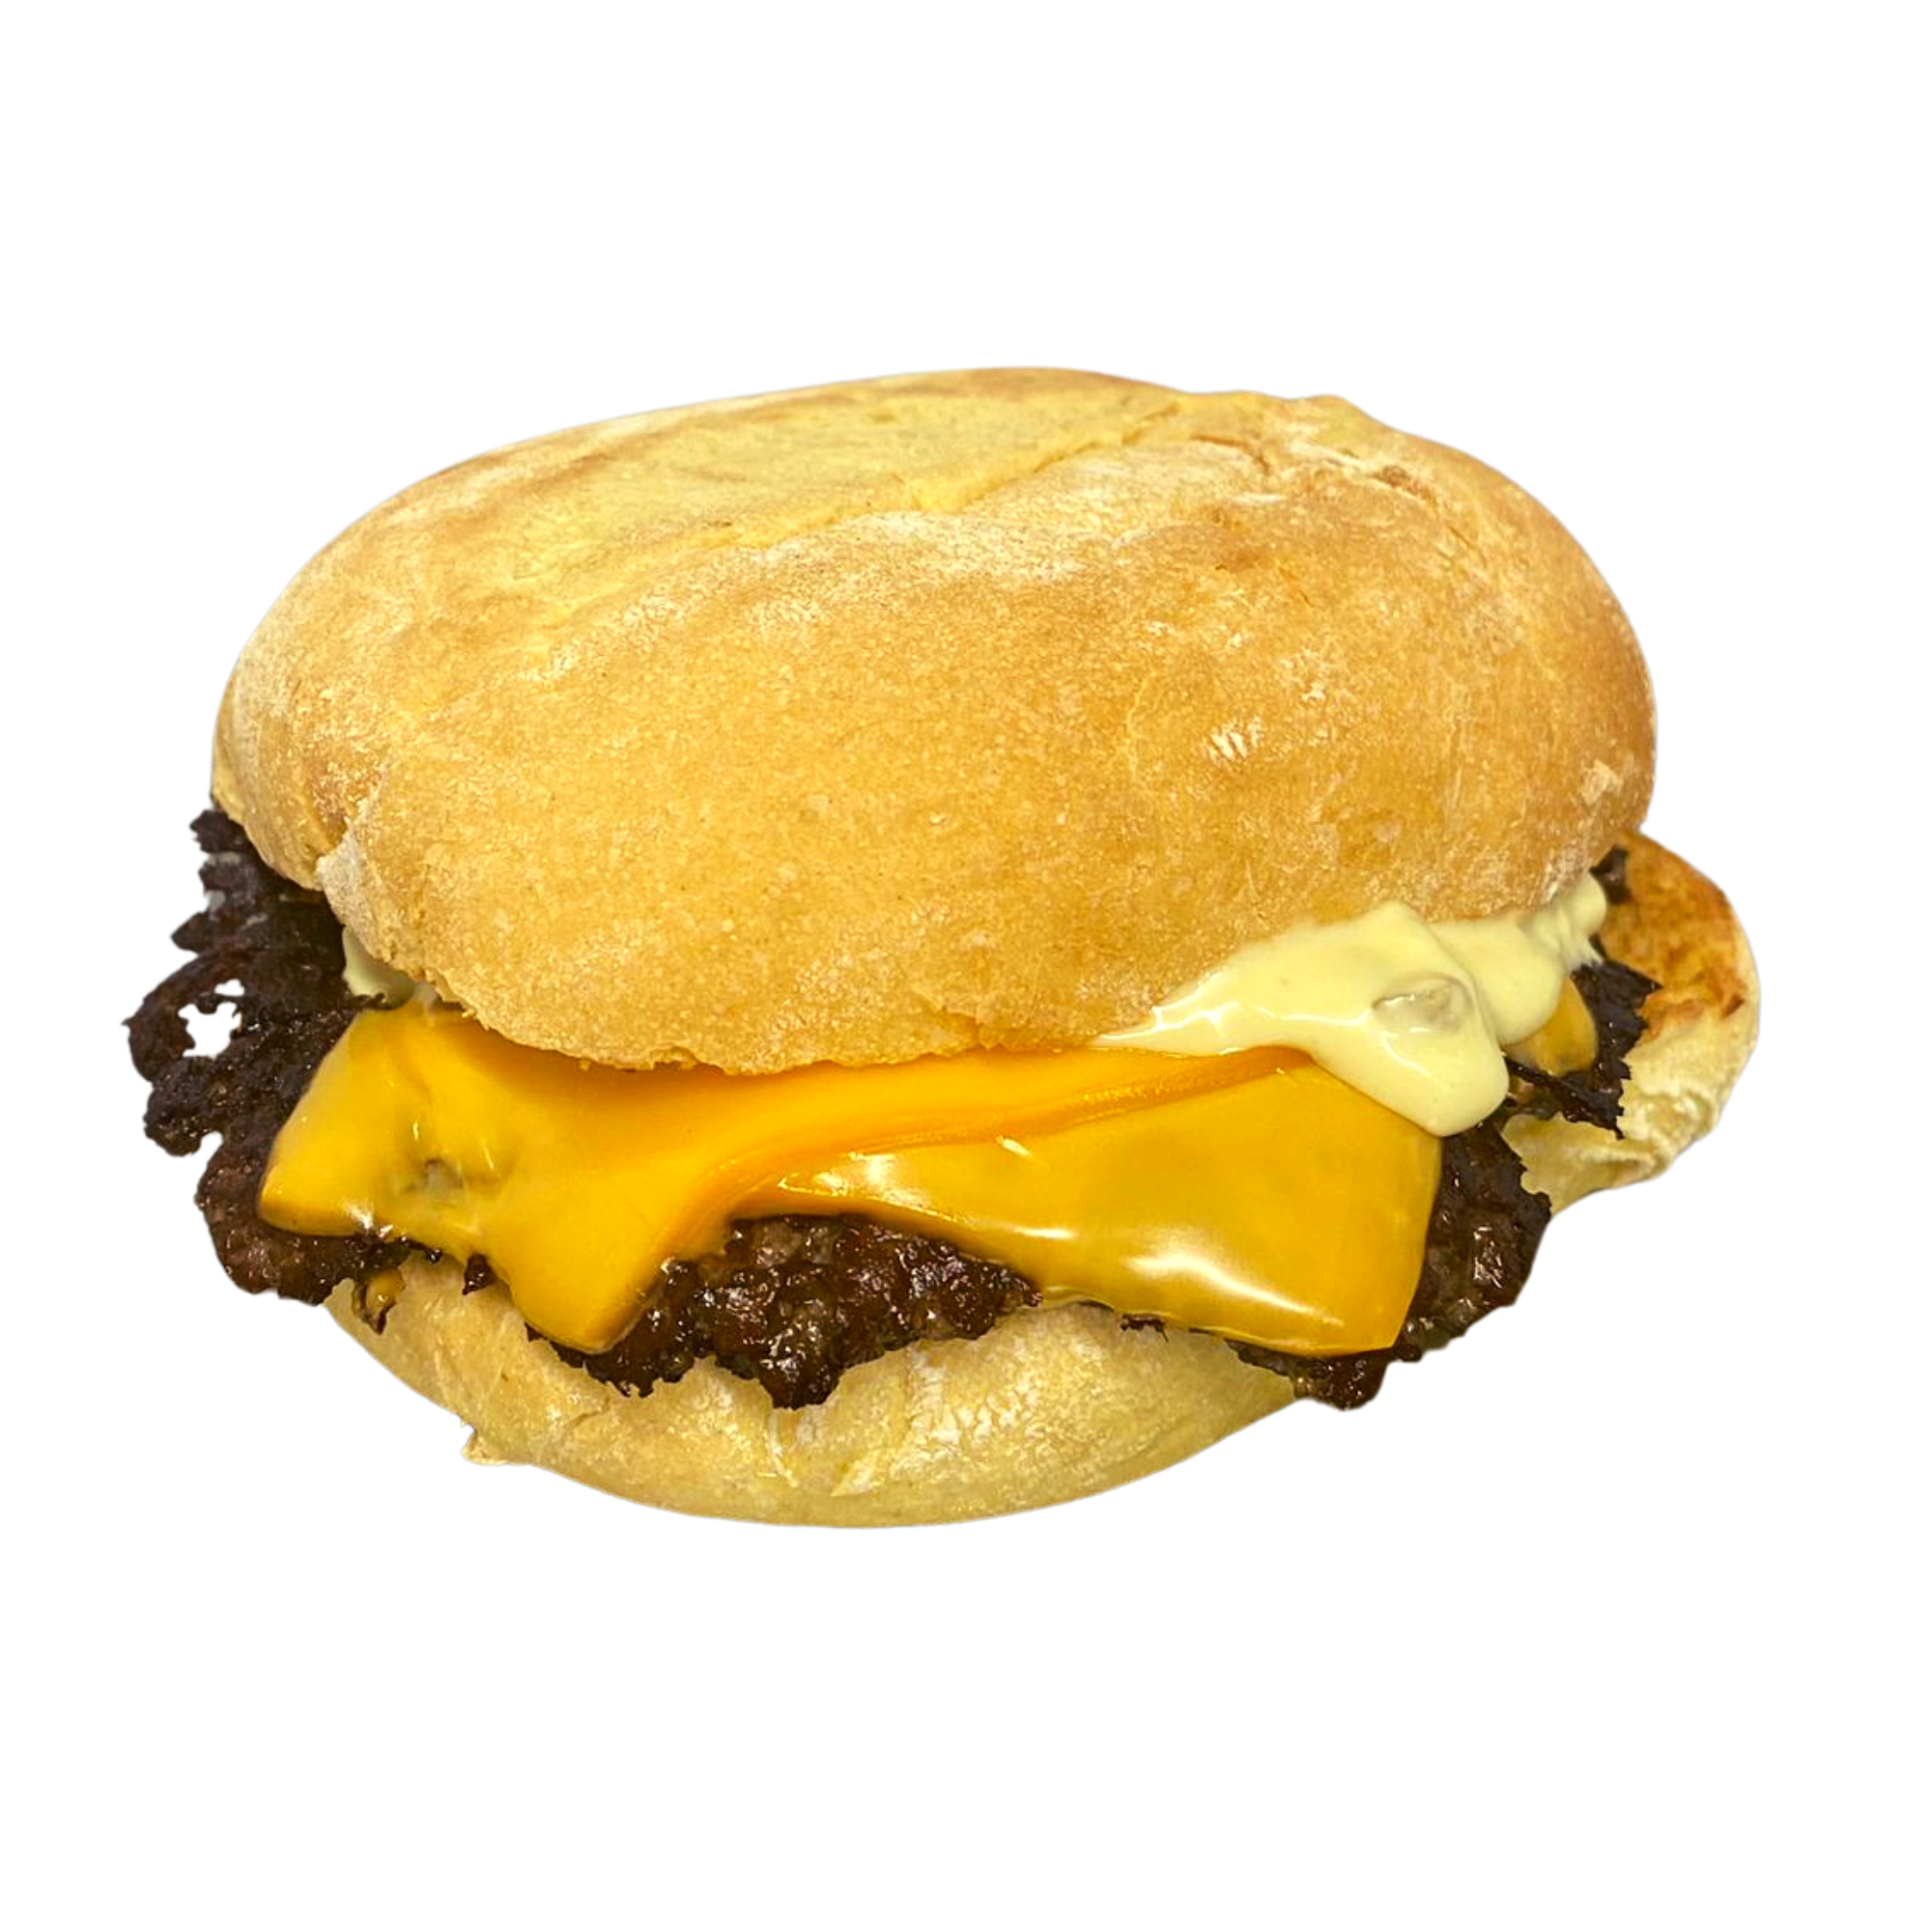 E-Meal Burgers meny åland bästa hamburgare mariehamn 4 burgers mariehamn goda pommes